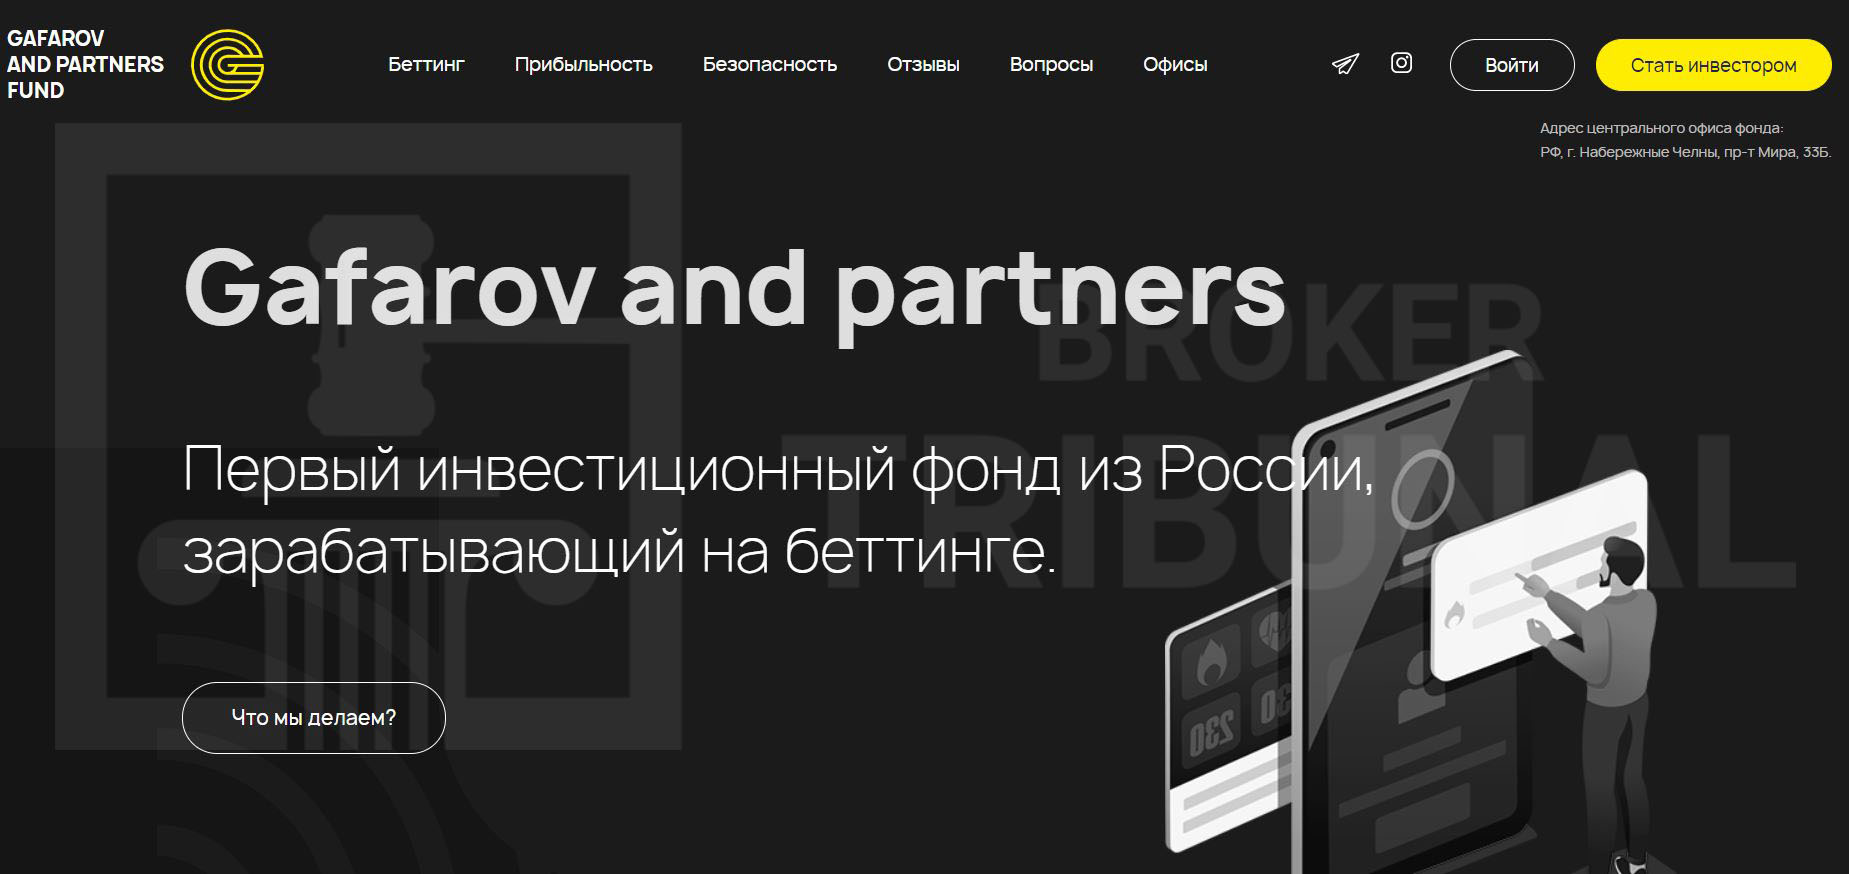 Gafarov and partners